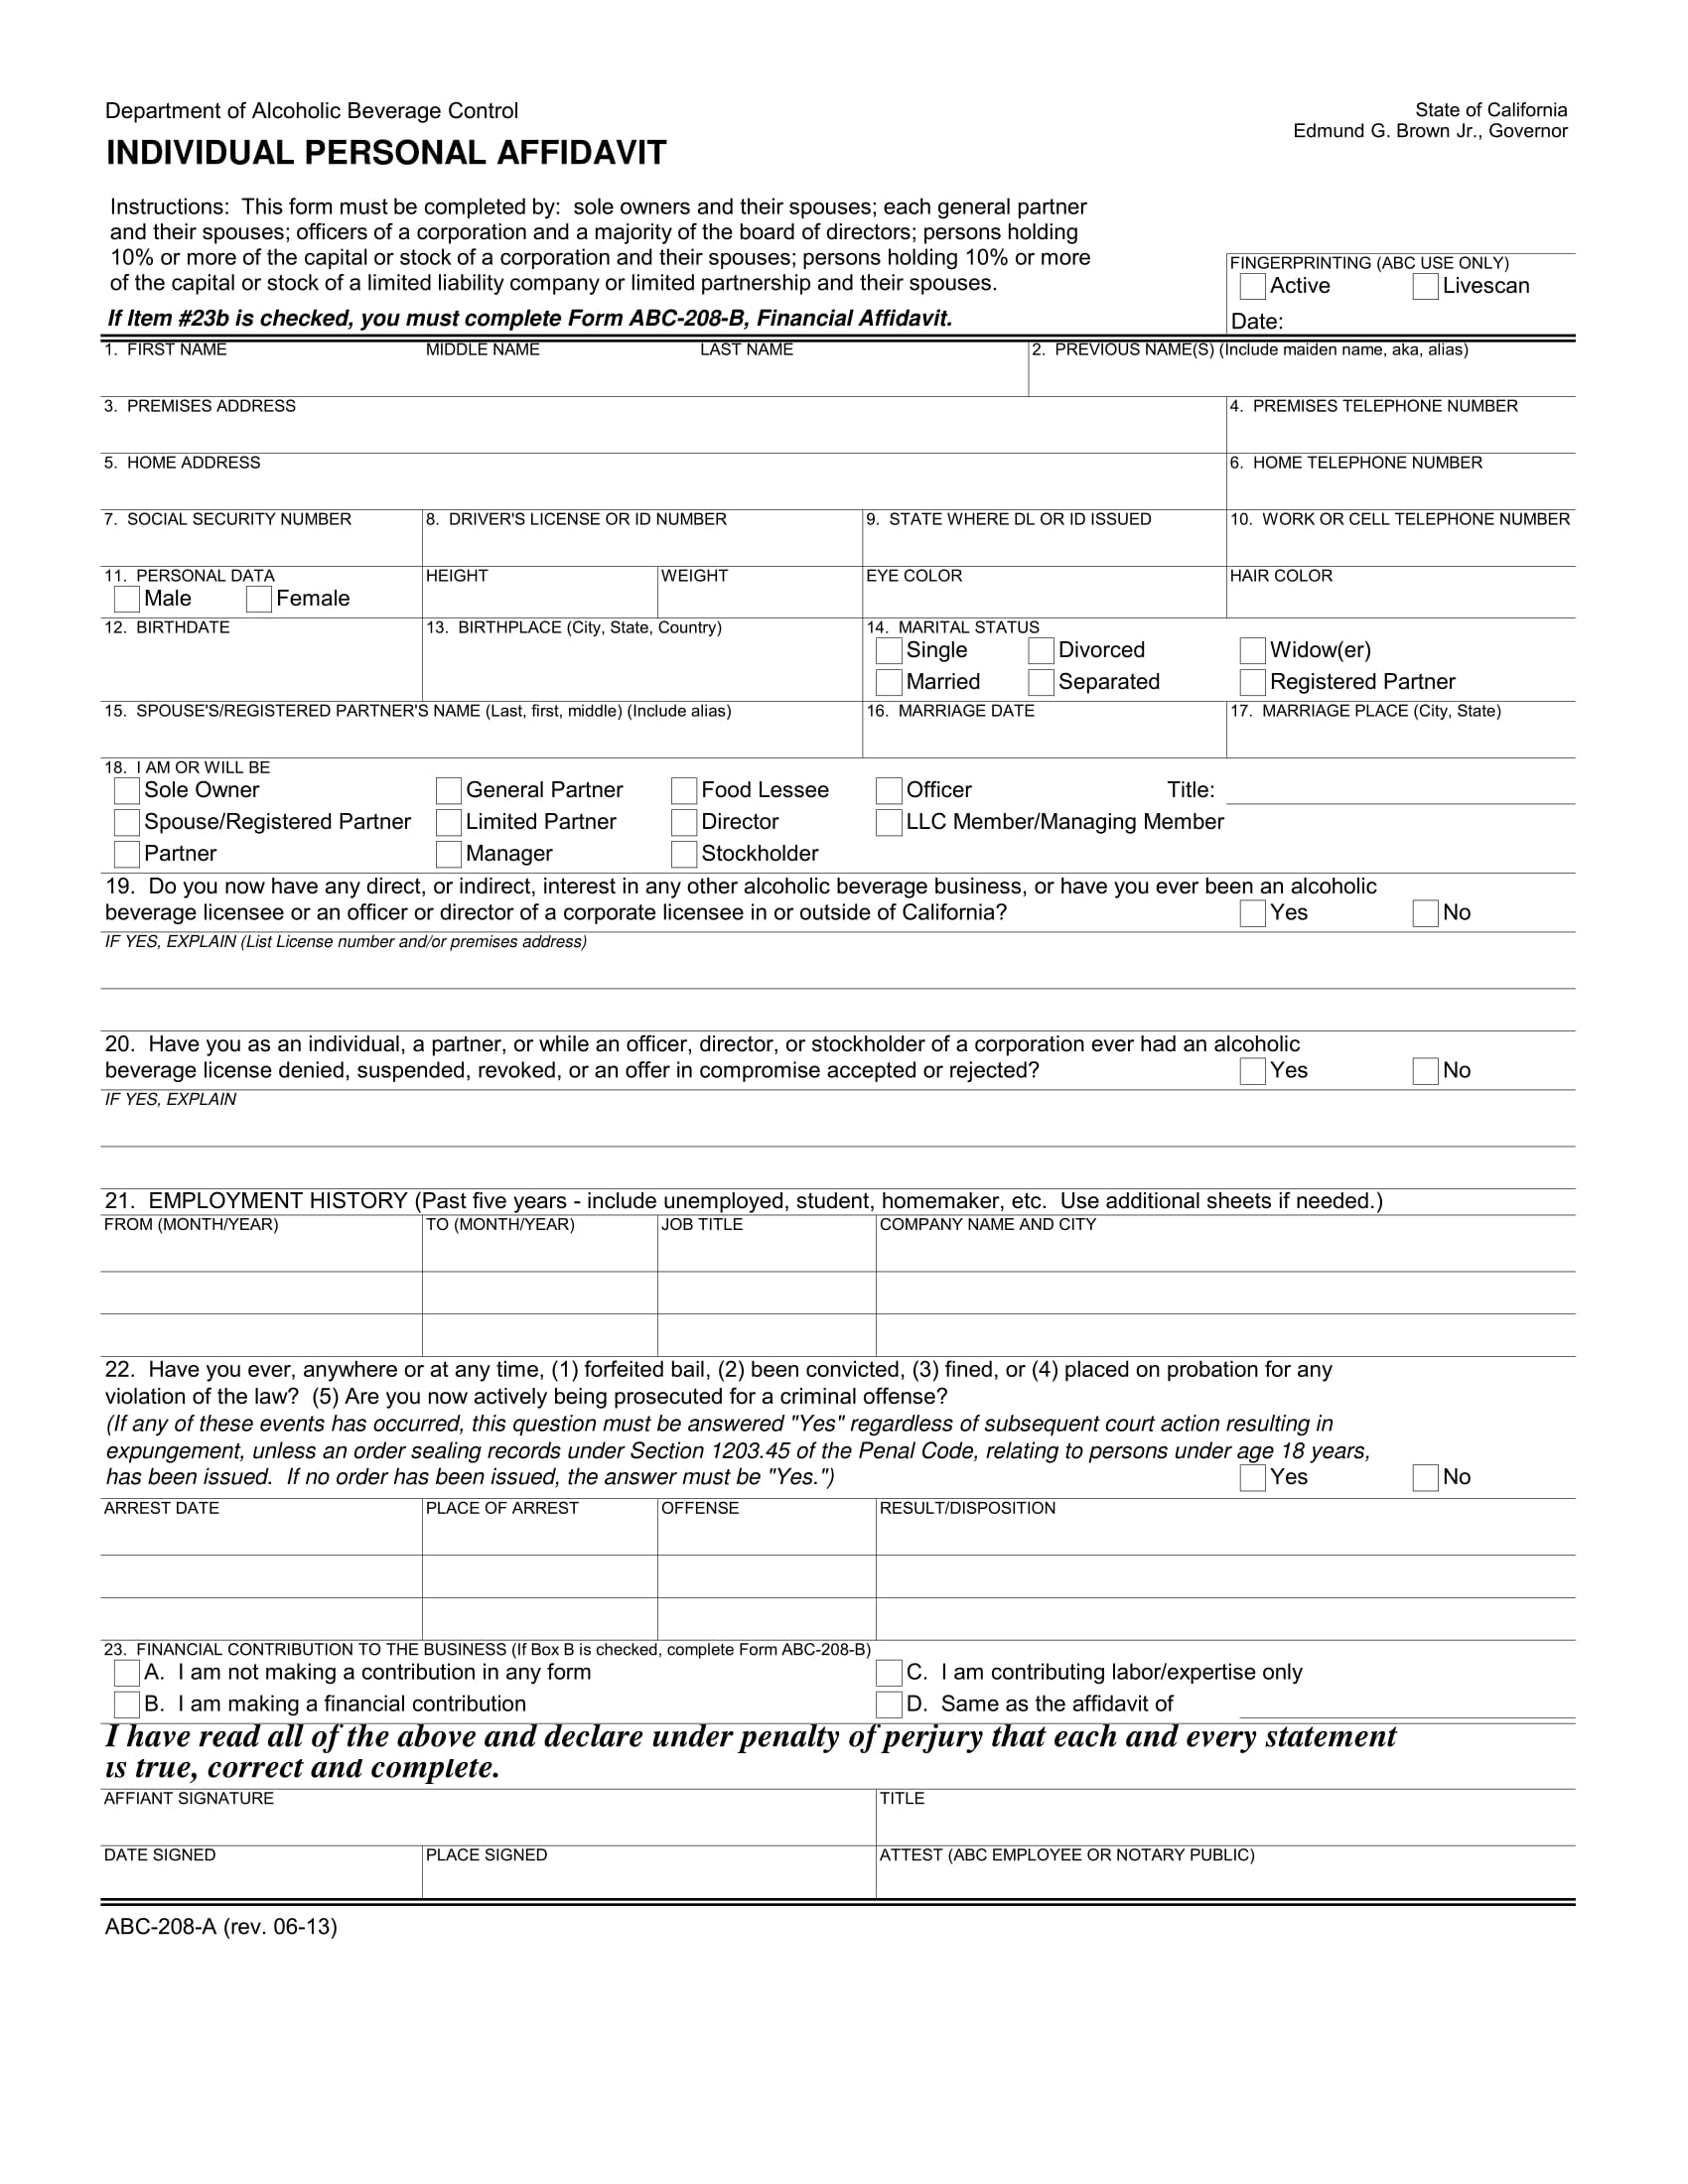 individual personal affidavit form 1